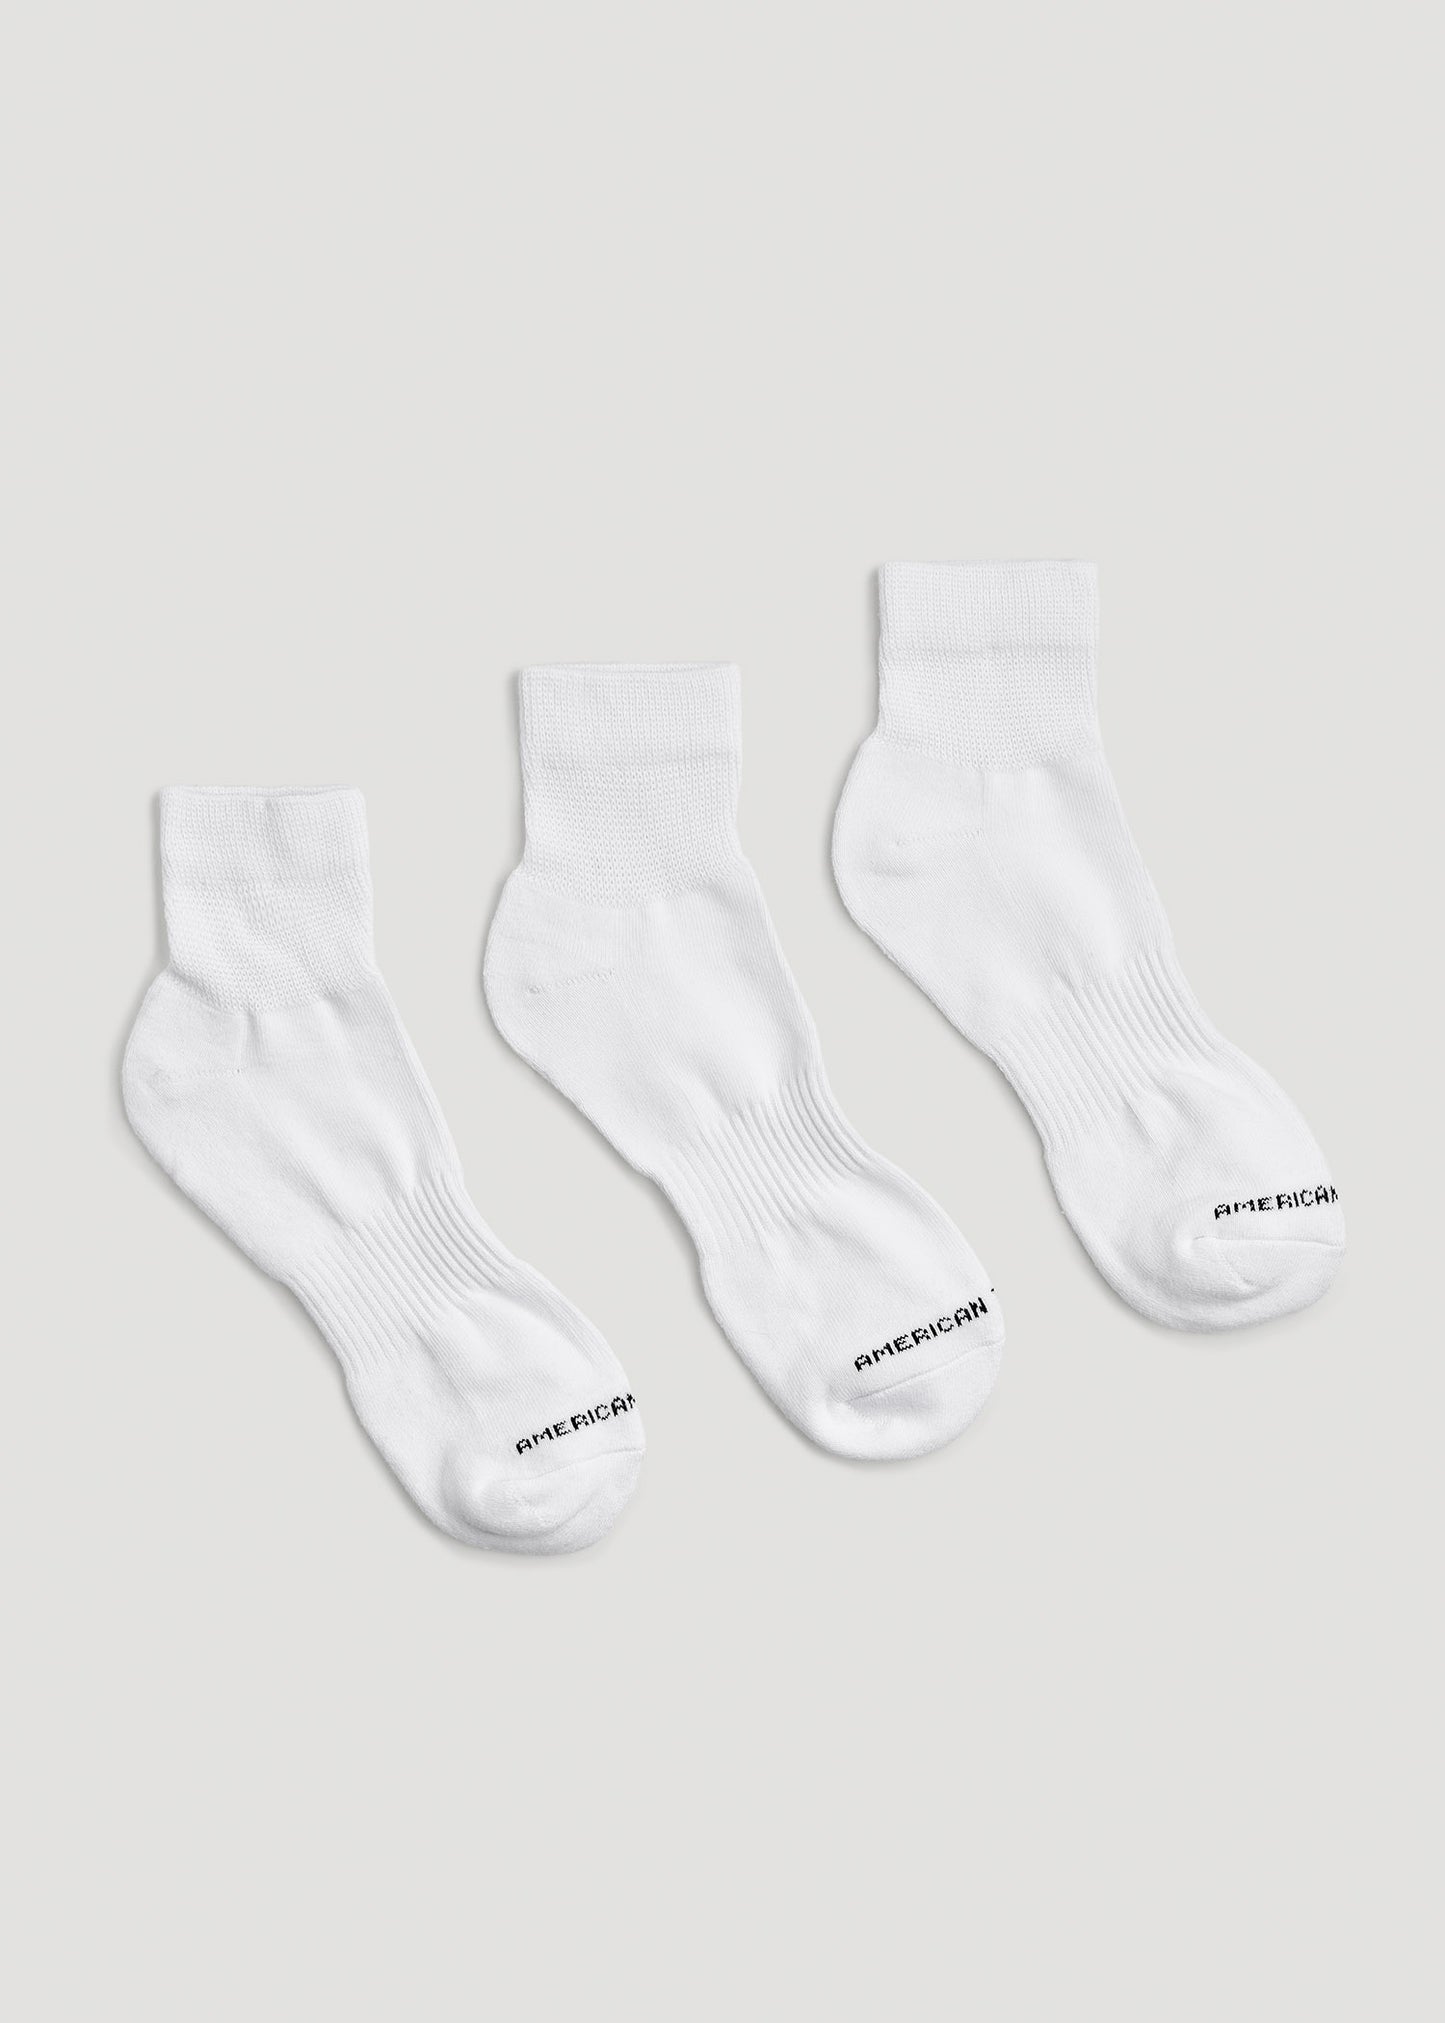 Men's Athletic Low Ankle Socks (X-Large Size: 13-15)